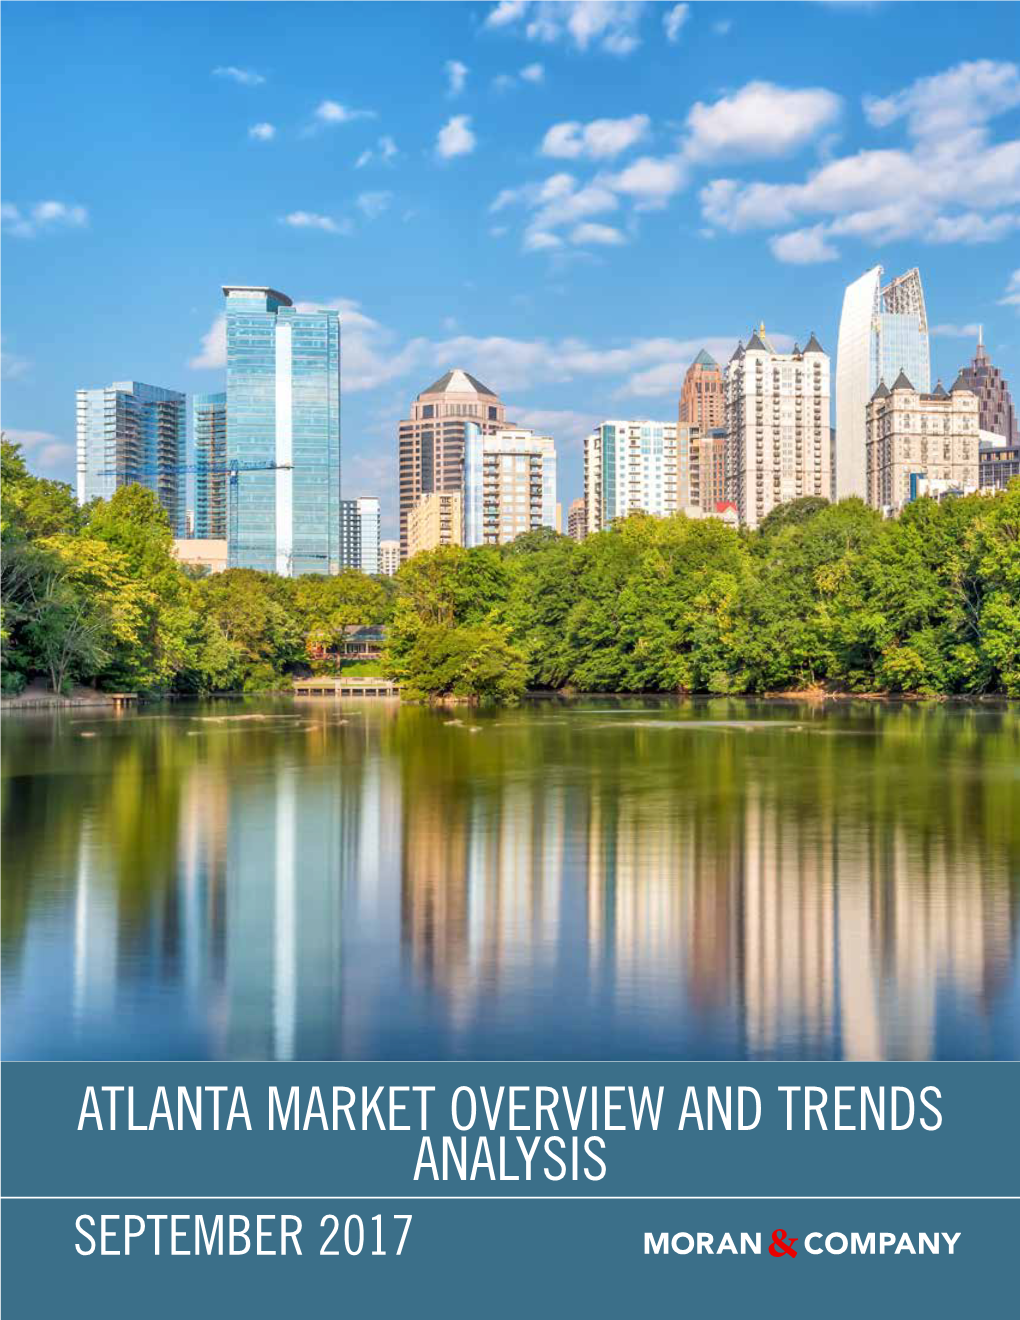 Atlanta Perimeter Submarket Overview